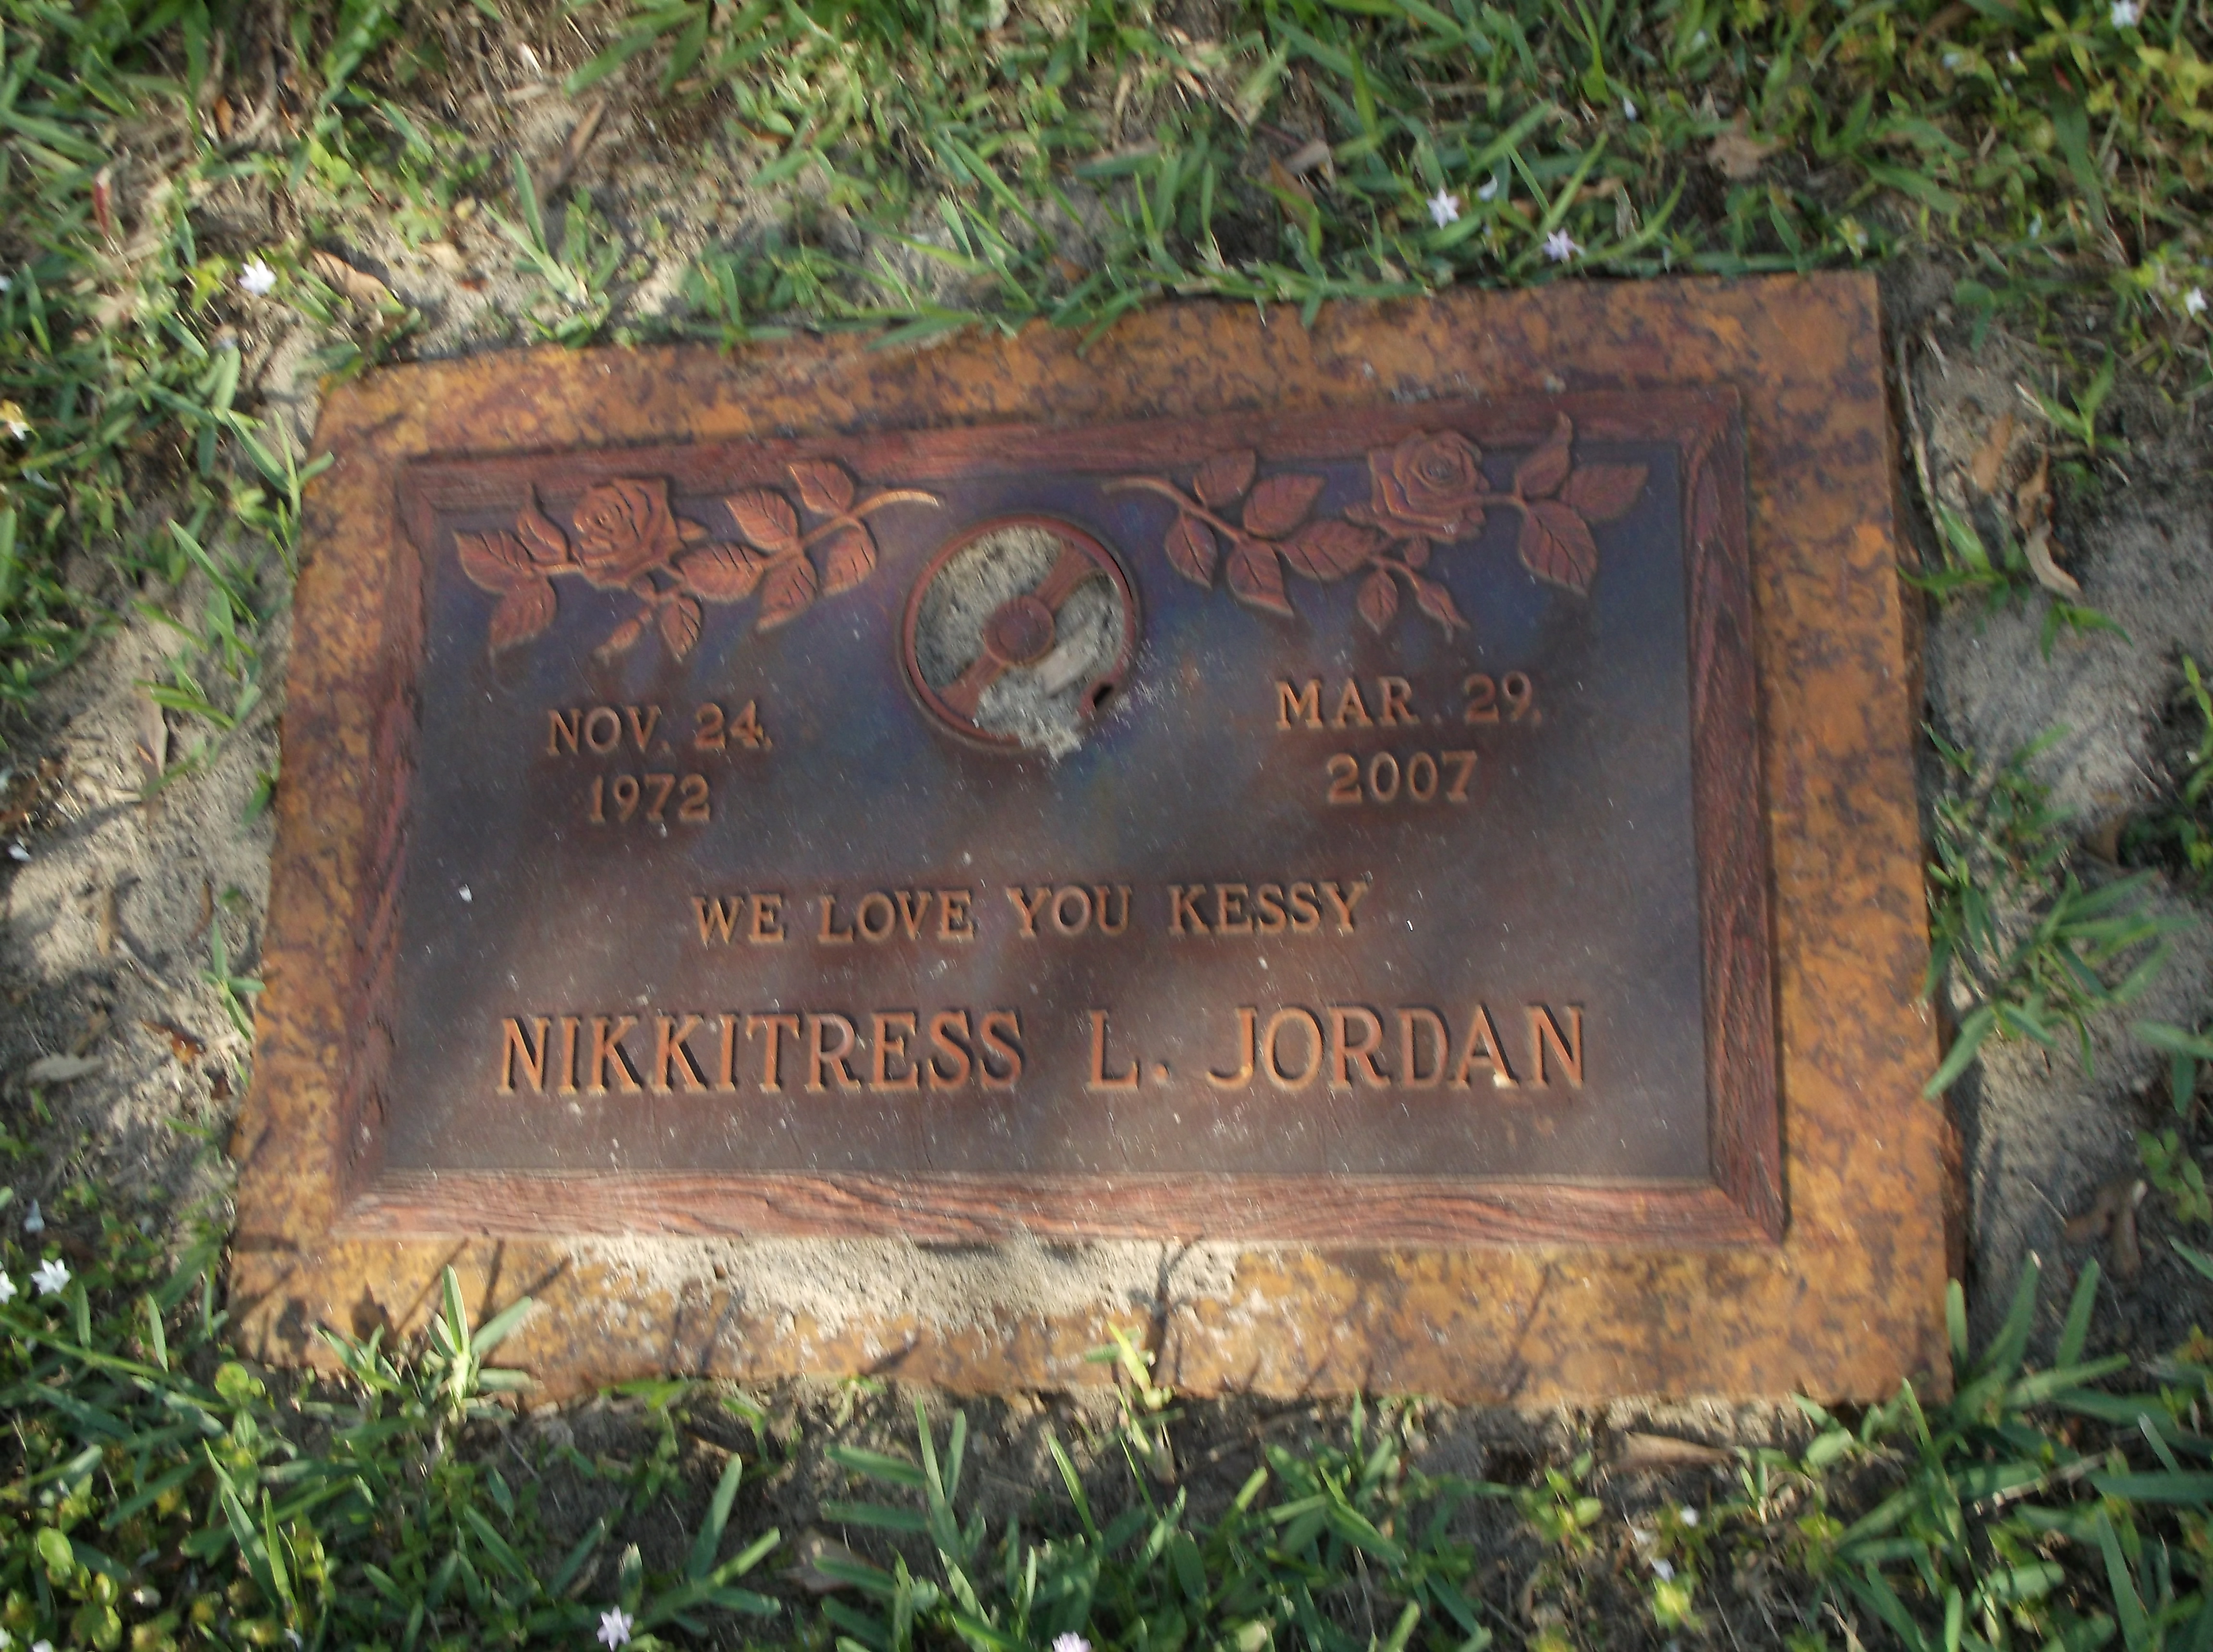 Nikkitress L Jordan